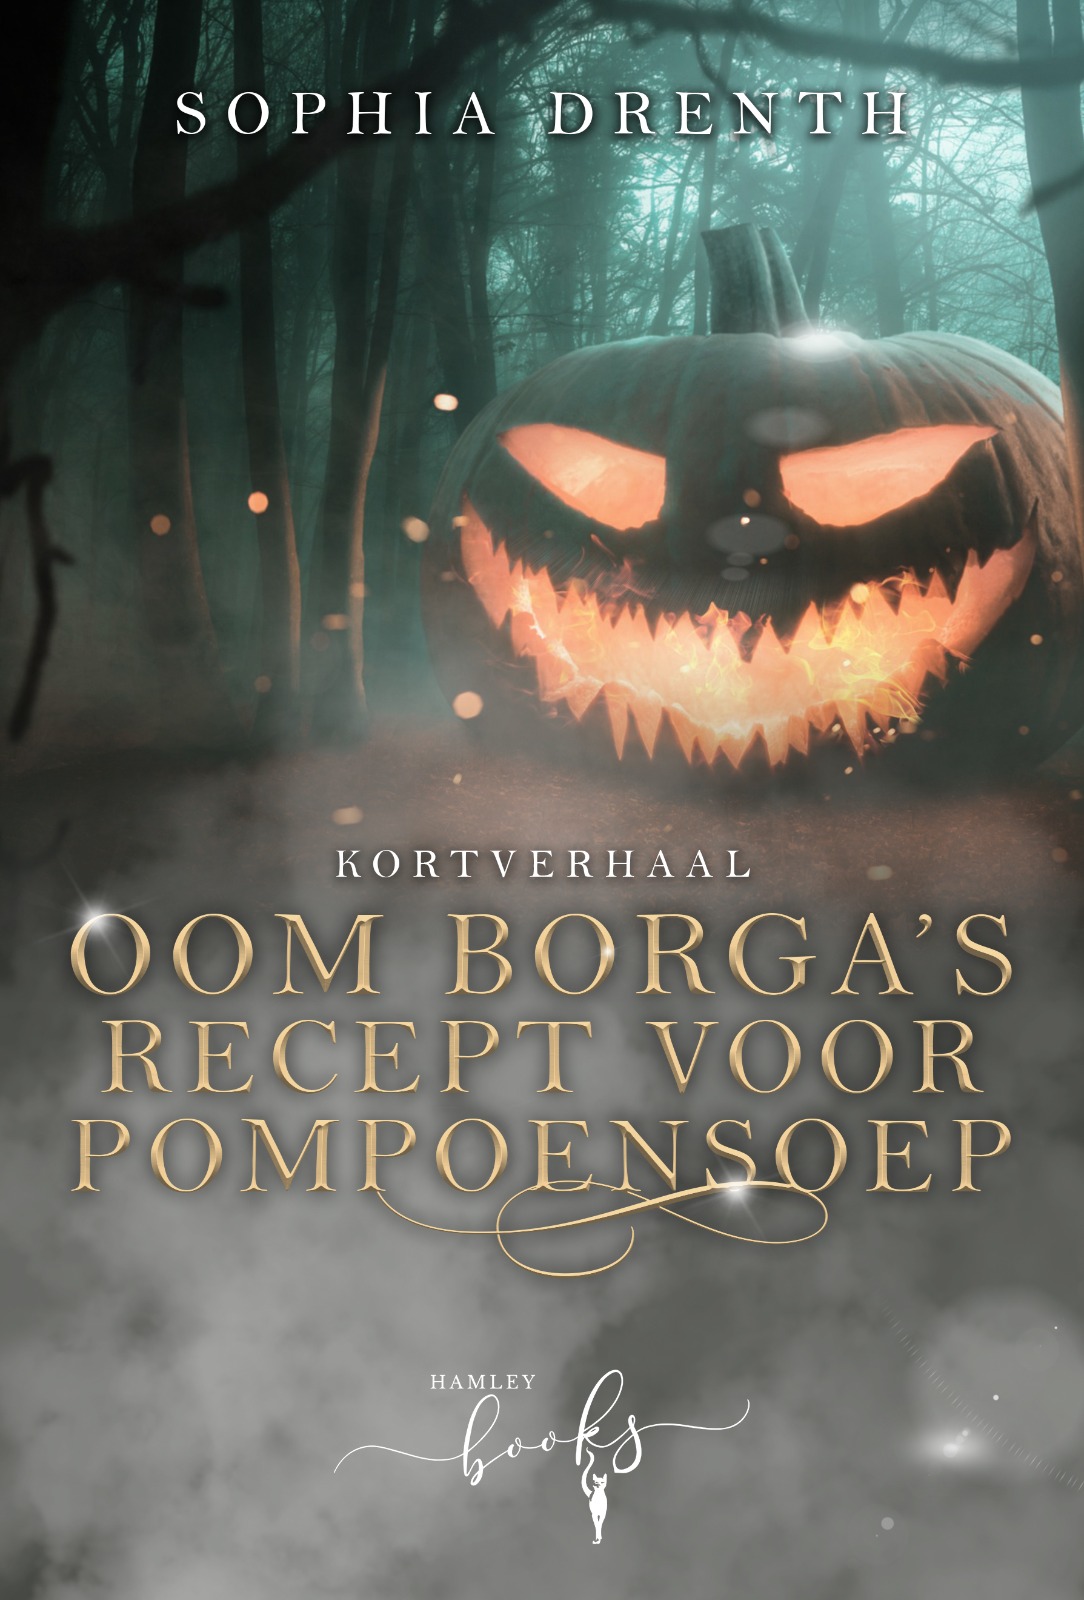 Oom Borga’s recept voor pompoensoep pdf